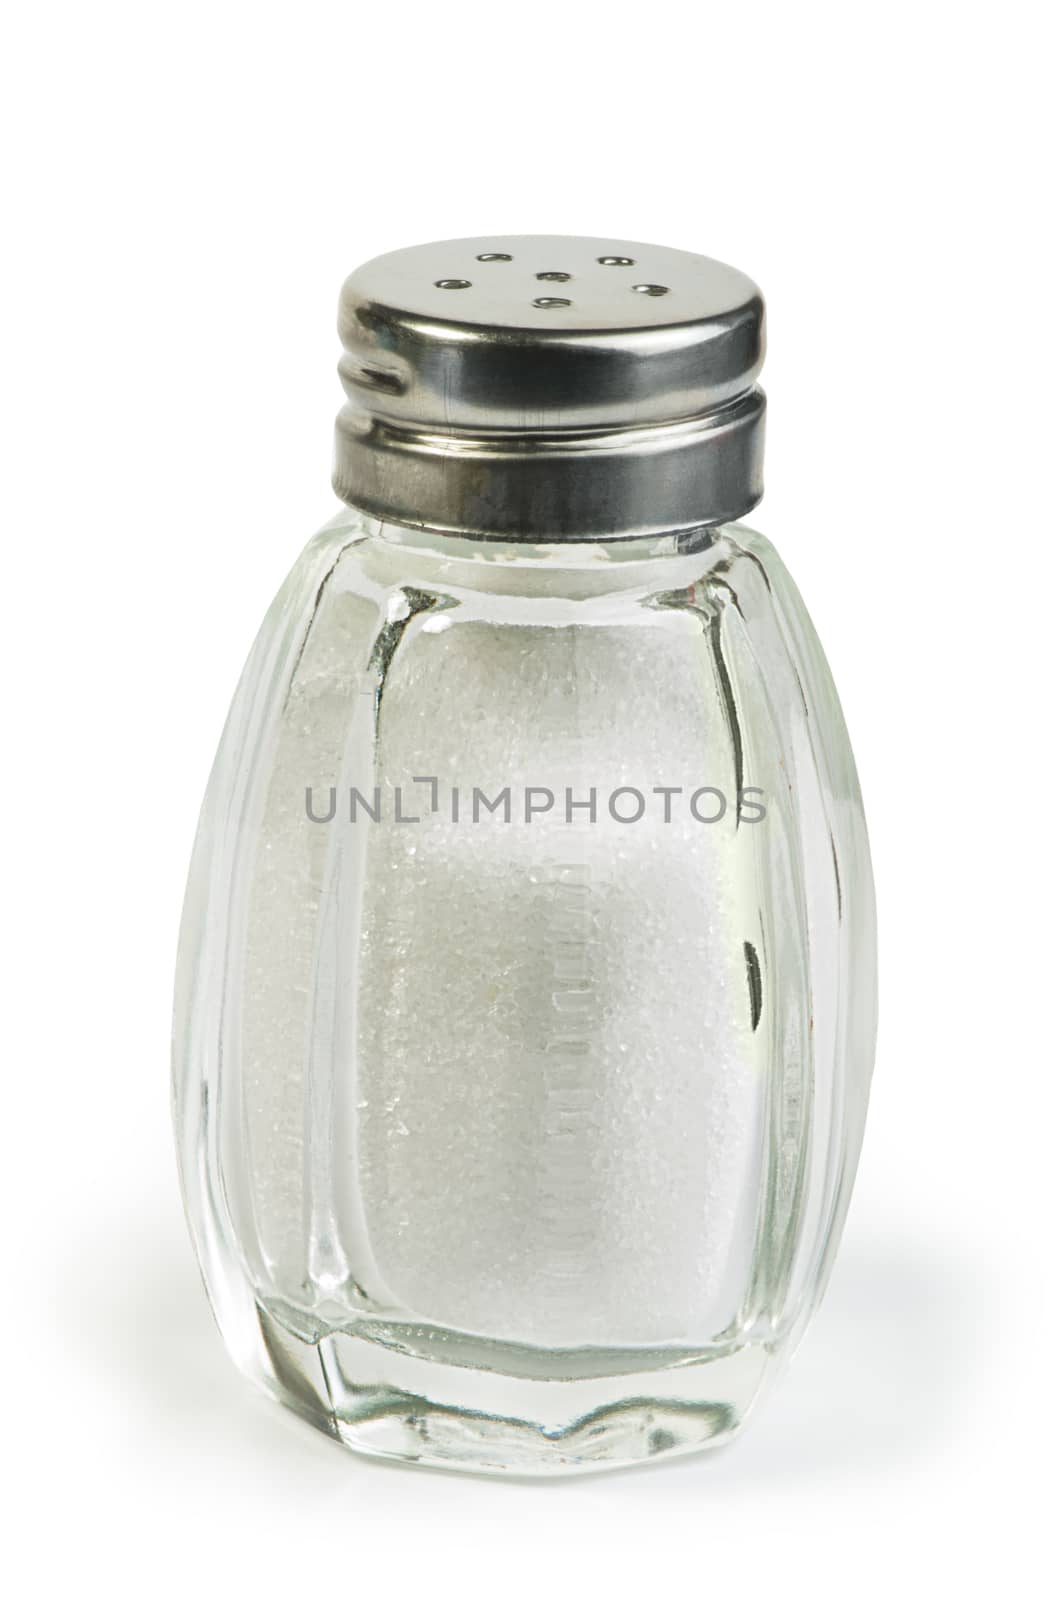 Salt and saltshaker on white background .